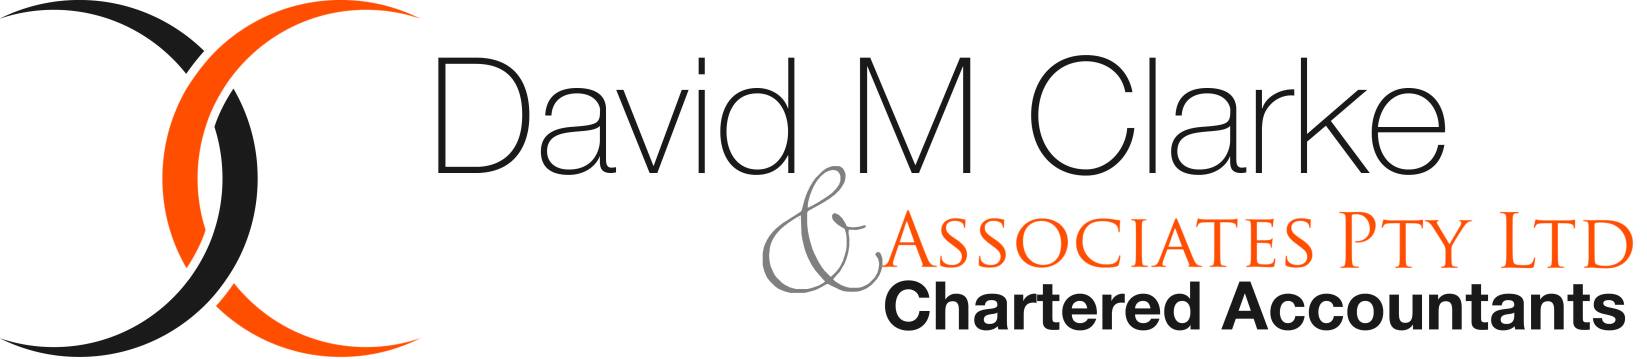 David M Clarke and Associates